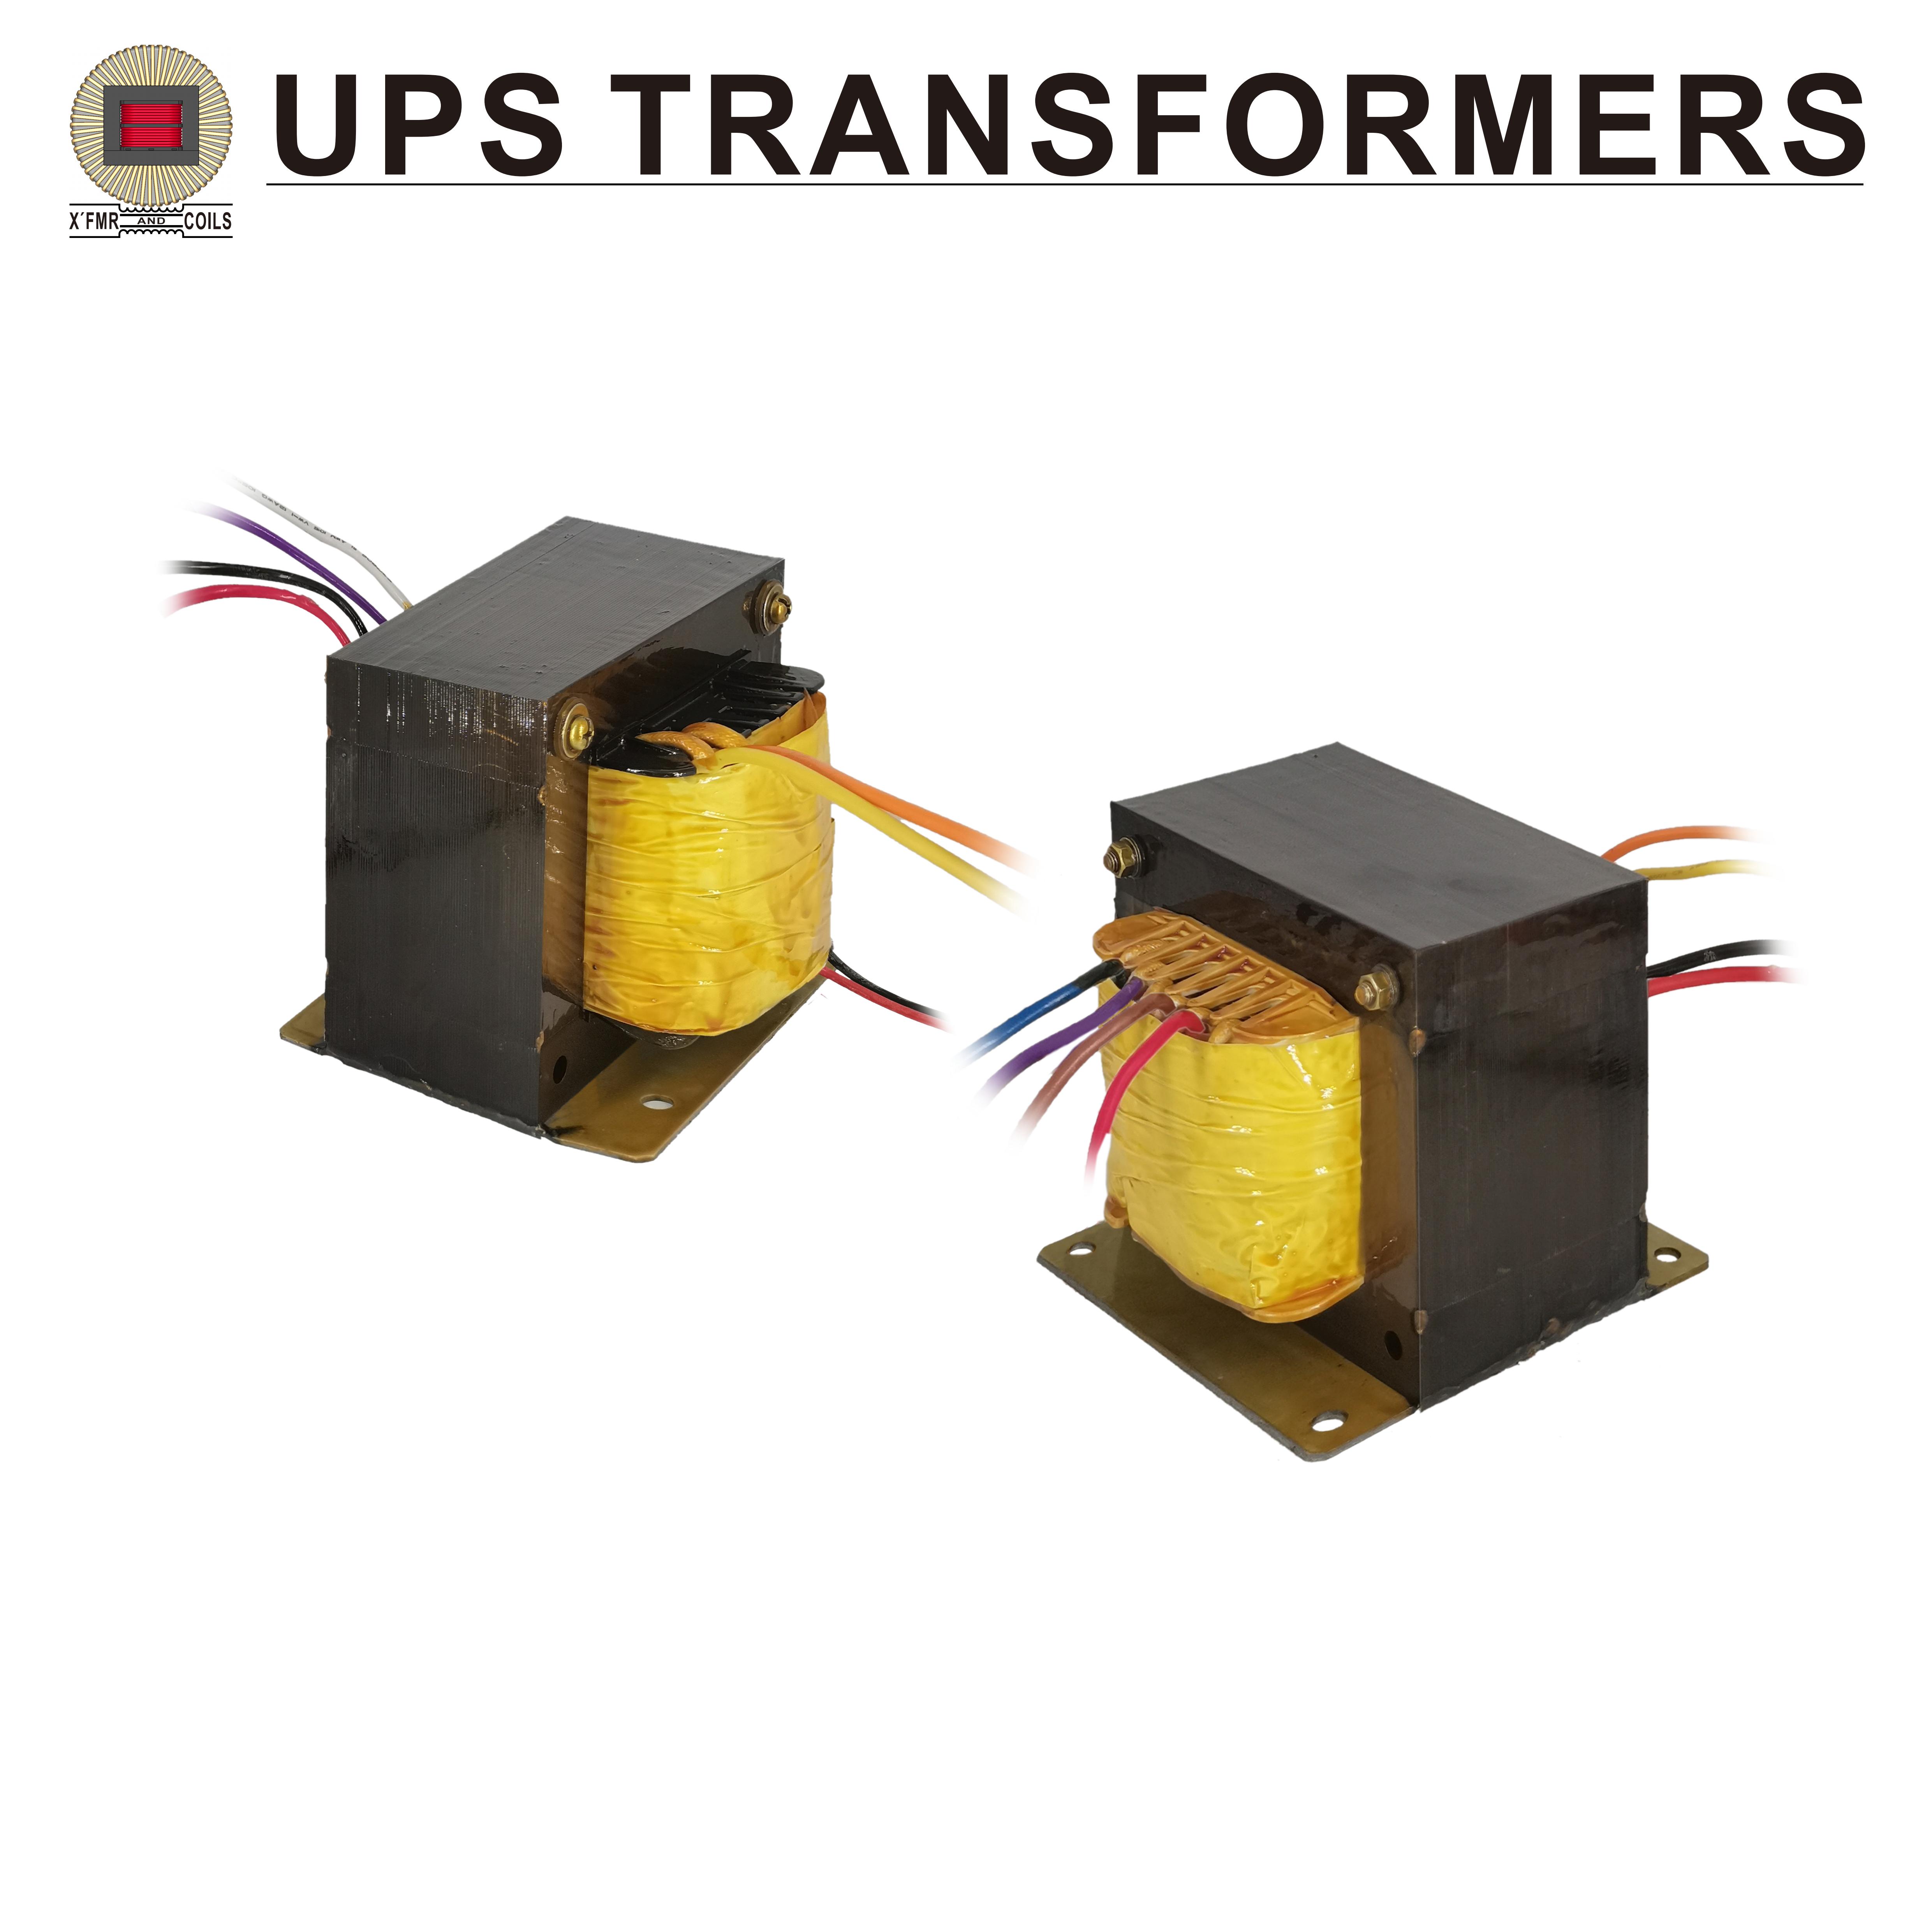 UPS Transformers UPST-01 Series